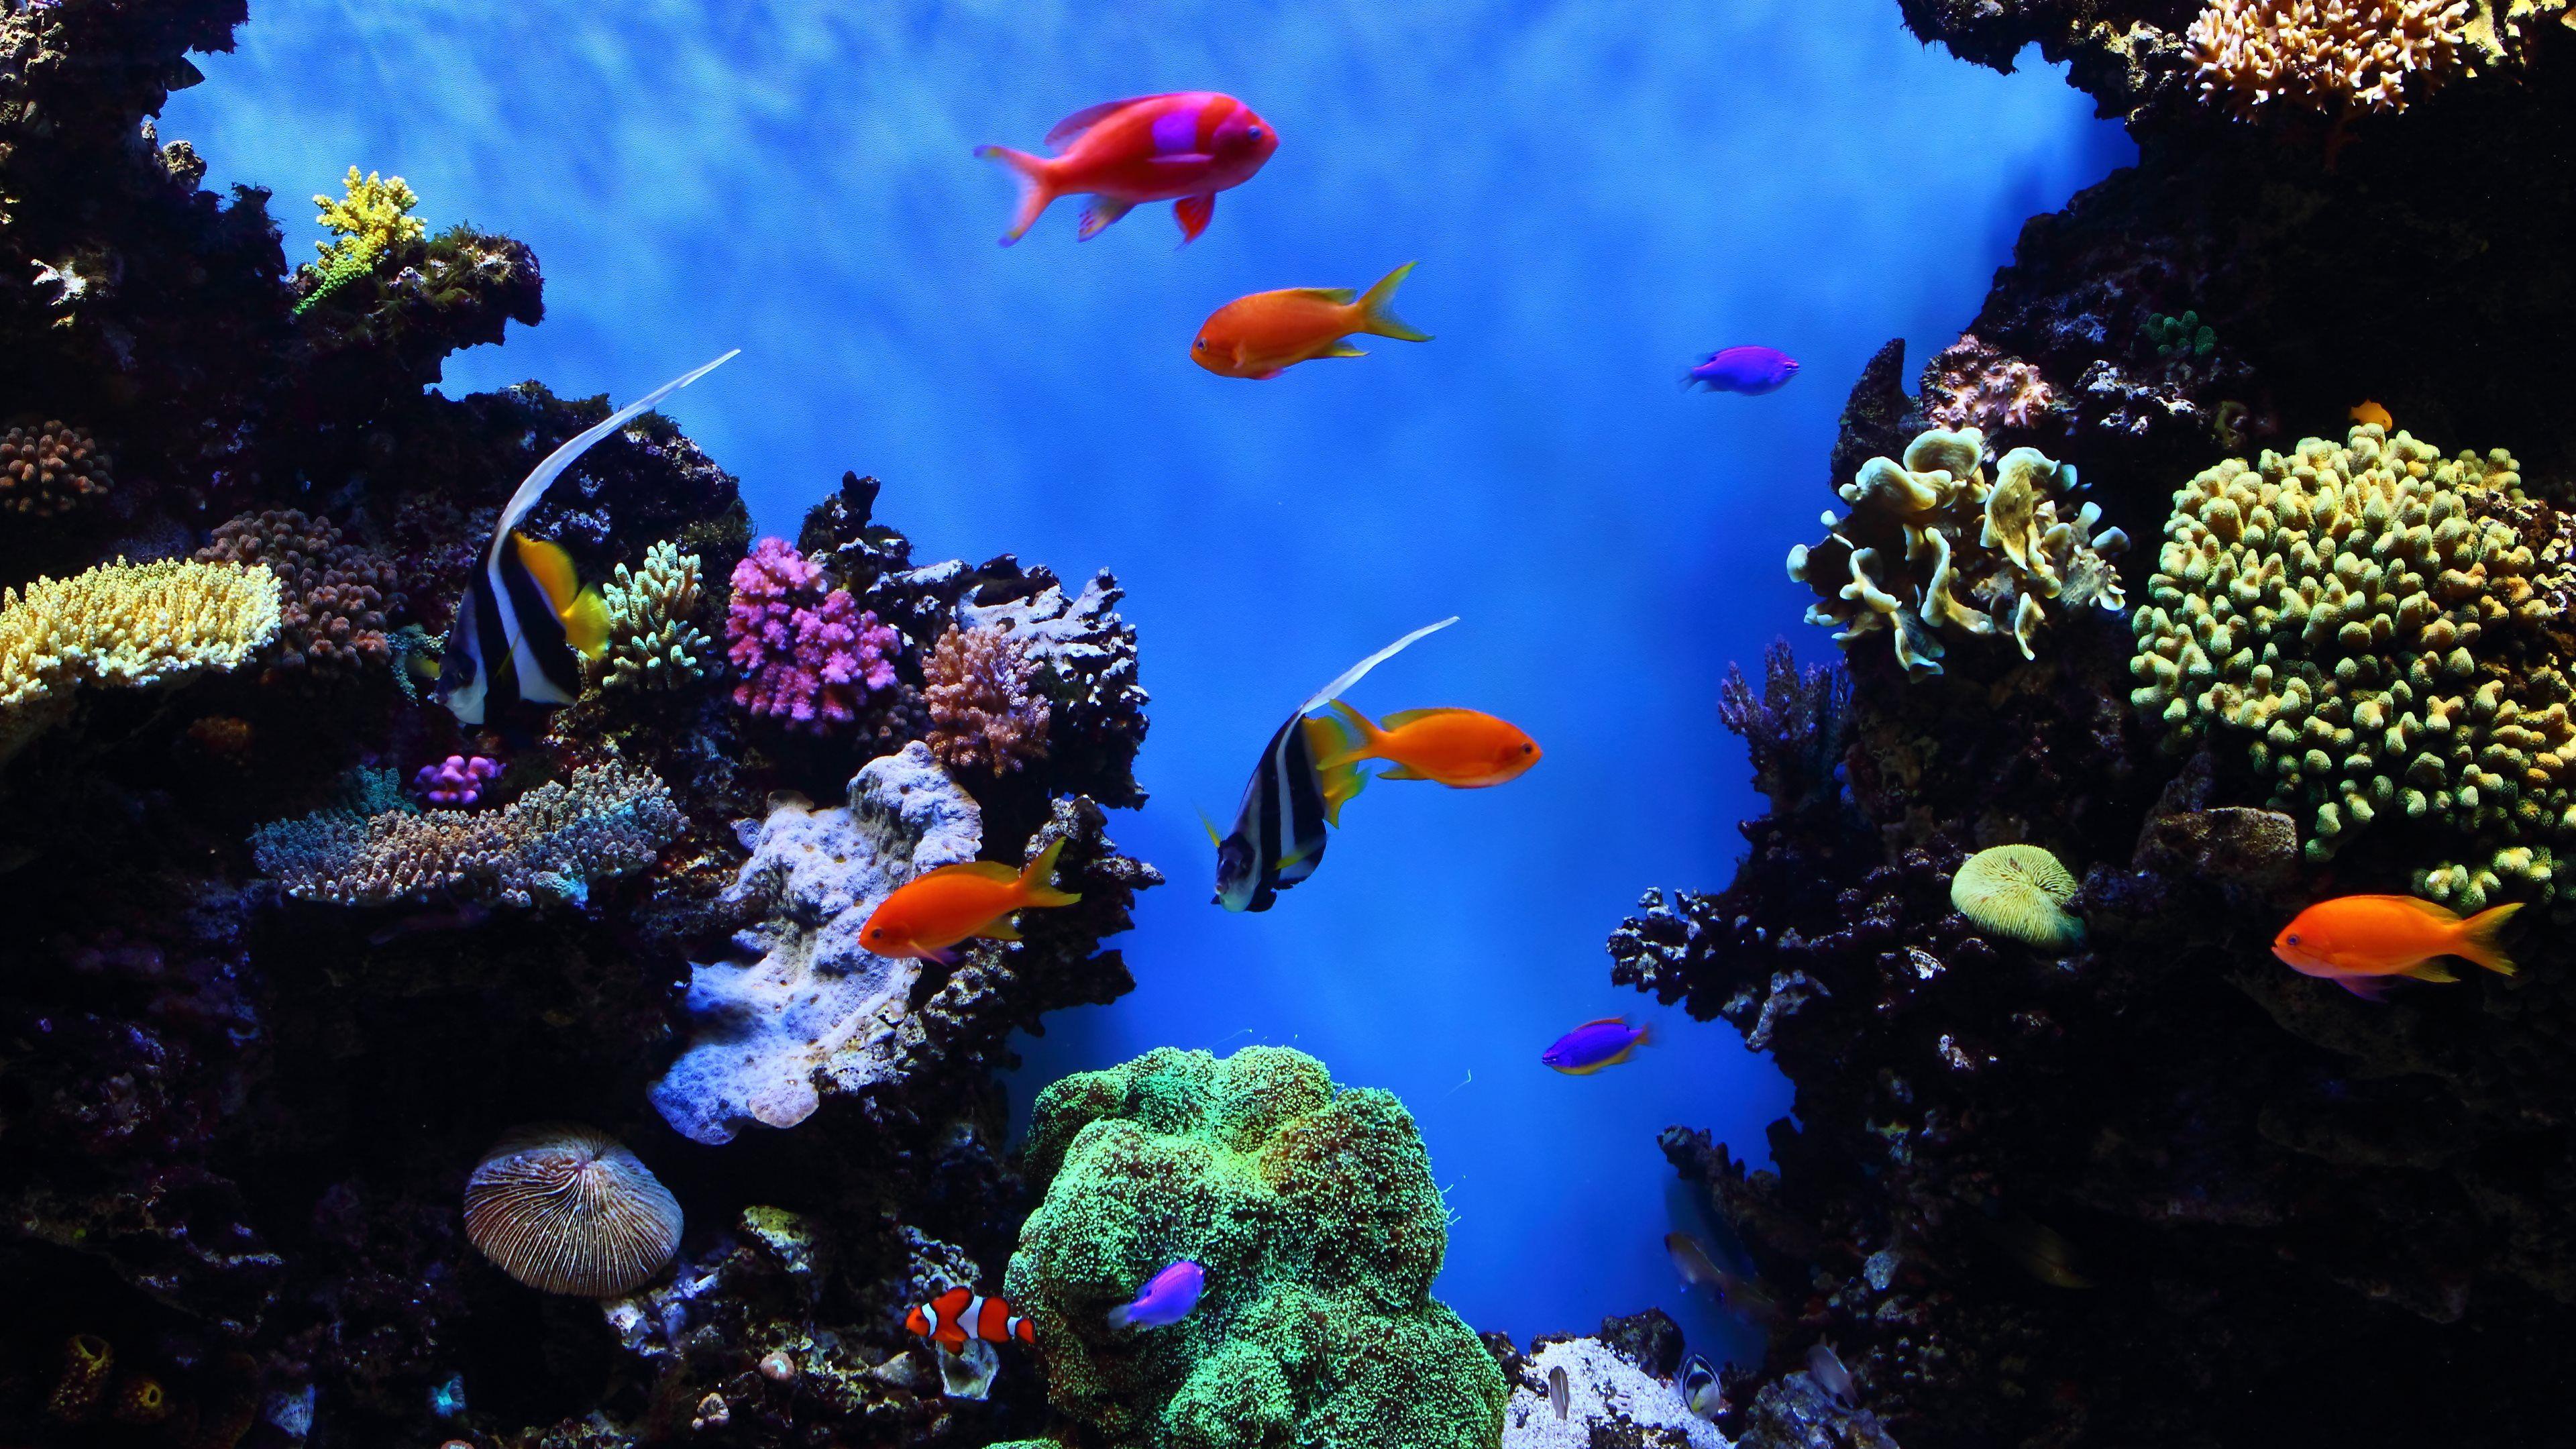 Aquarium 4k uhd 16:9 wallpapers hd, desktop backgrounds 3840x2160, images  and pictures